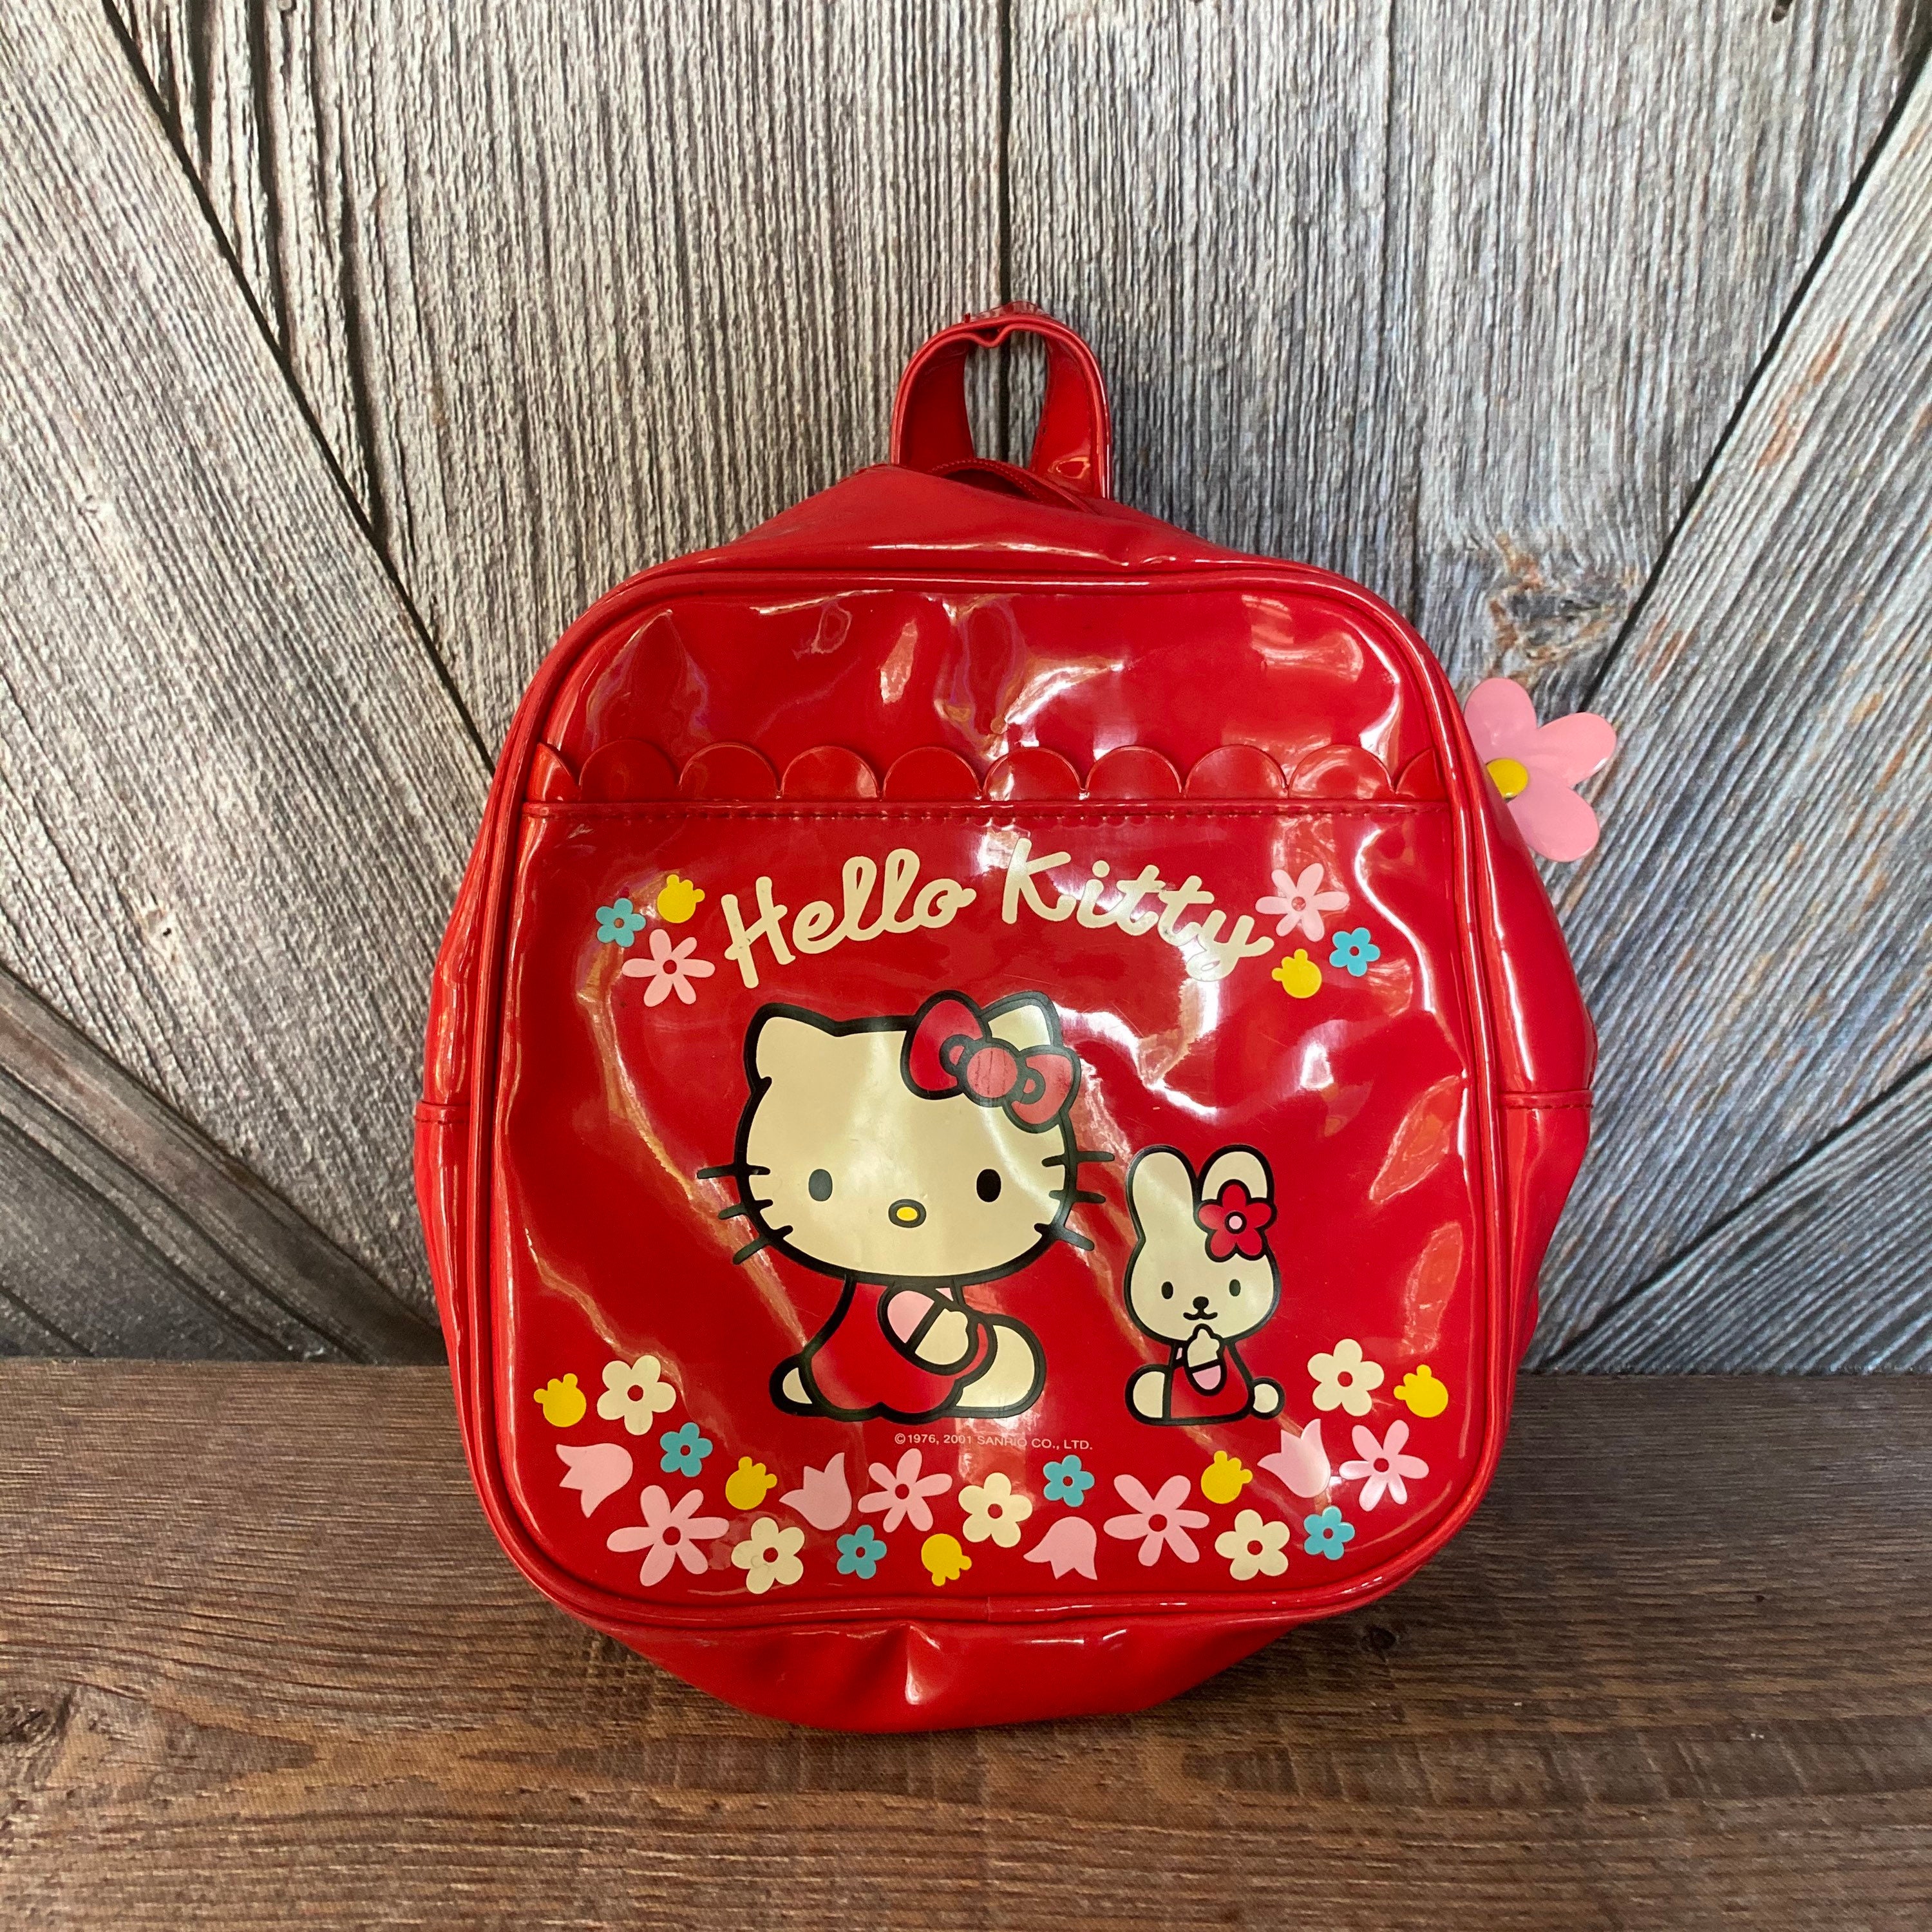 Sanrio Hello Kitty Oversize Teddy Messenger Bag School Shoulder/Diaper Bag